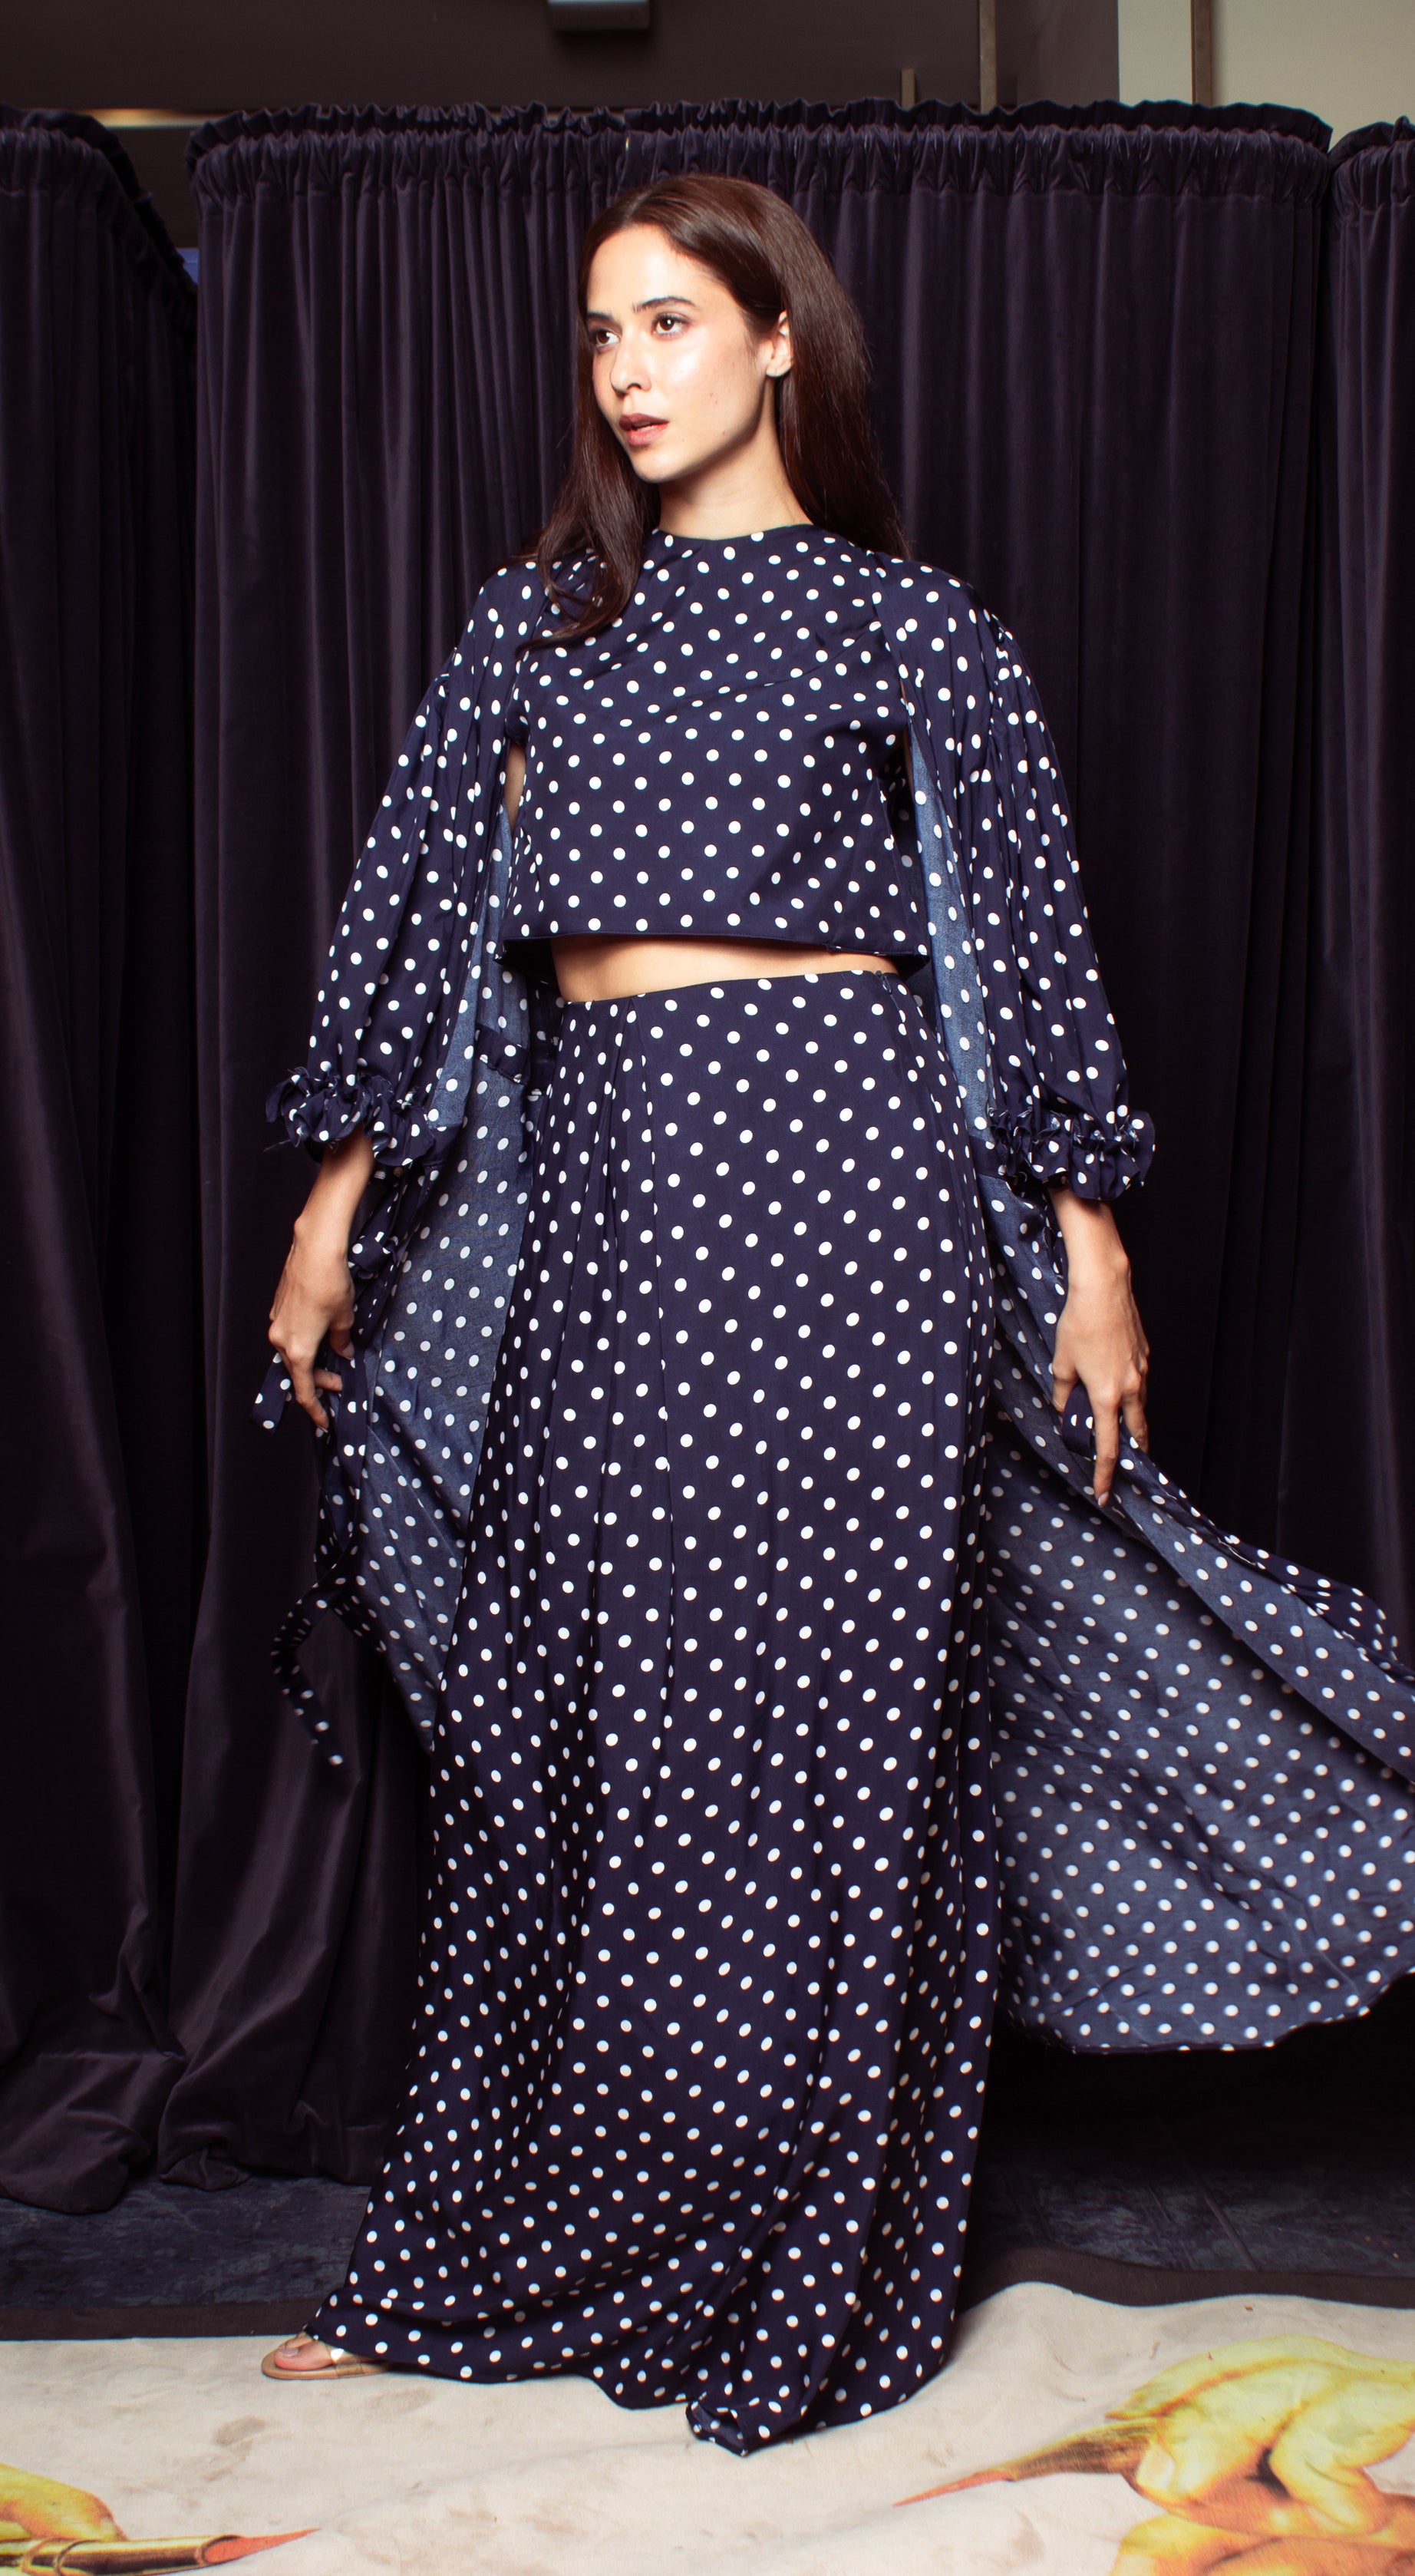 Wrap Dress with Ruffle Hem Trimmings on Sleeve - Blue-Based Polka Dot